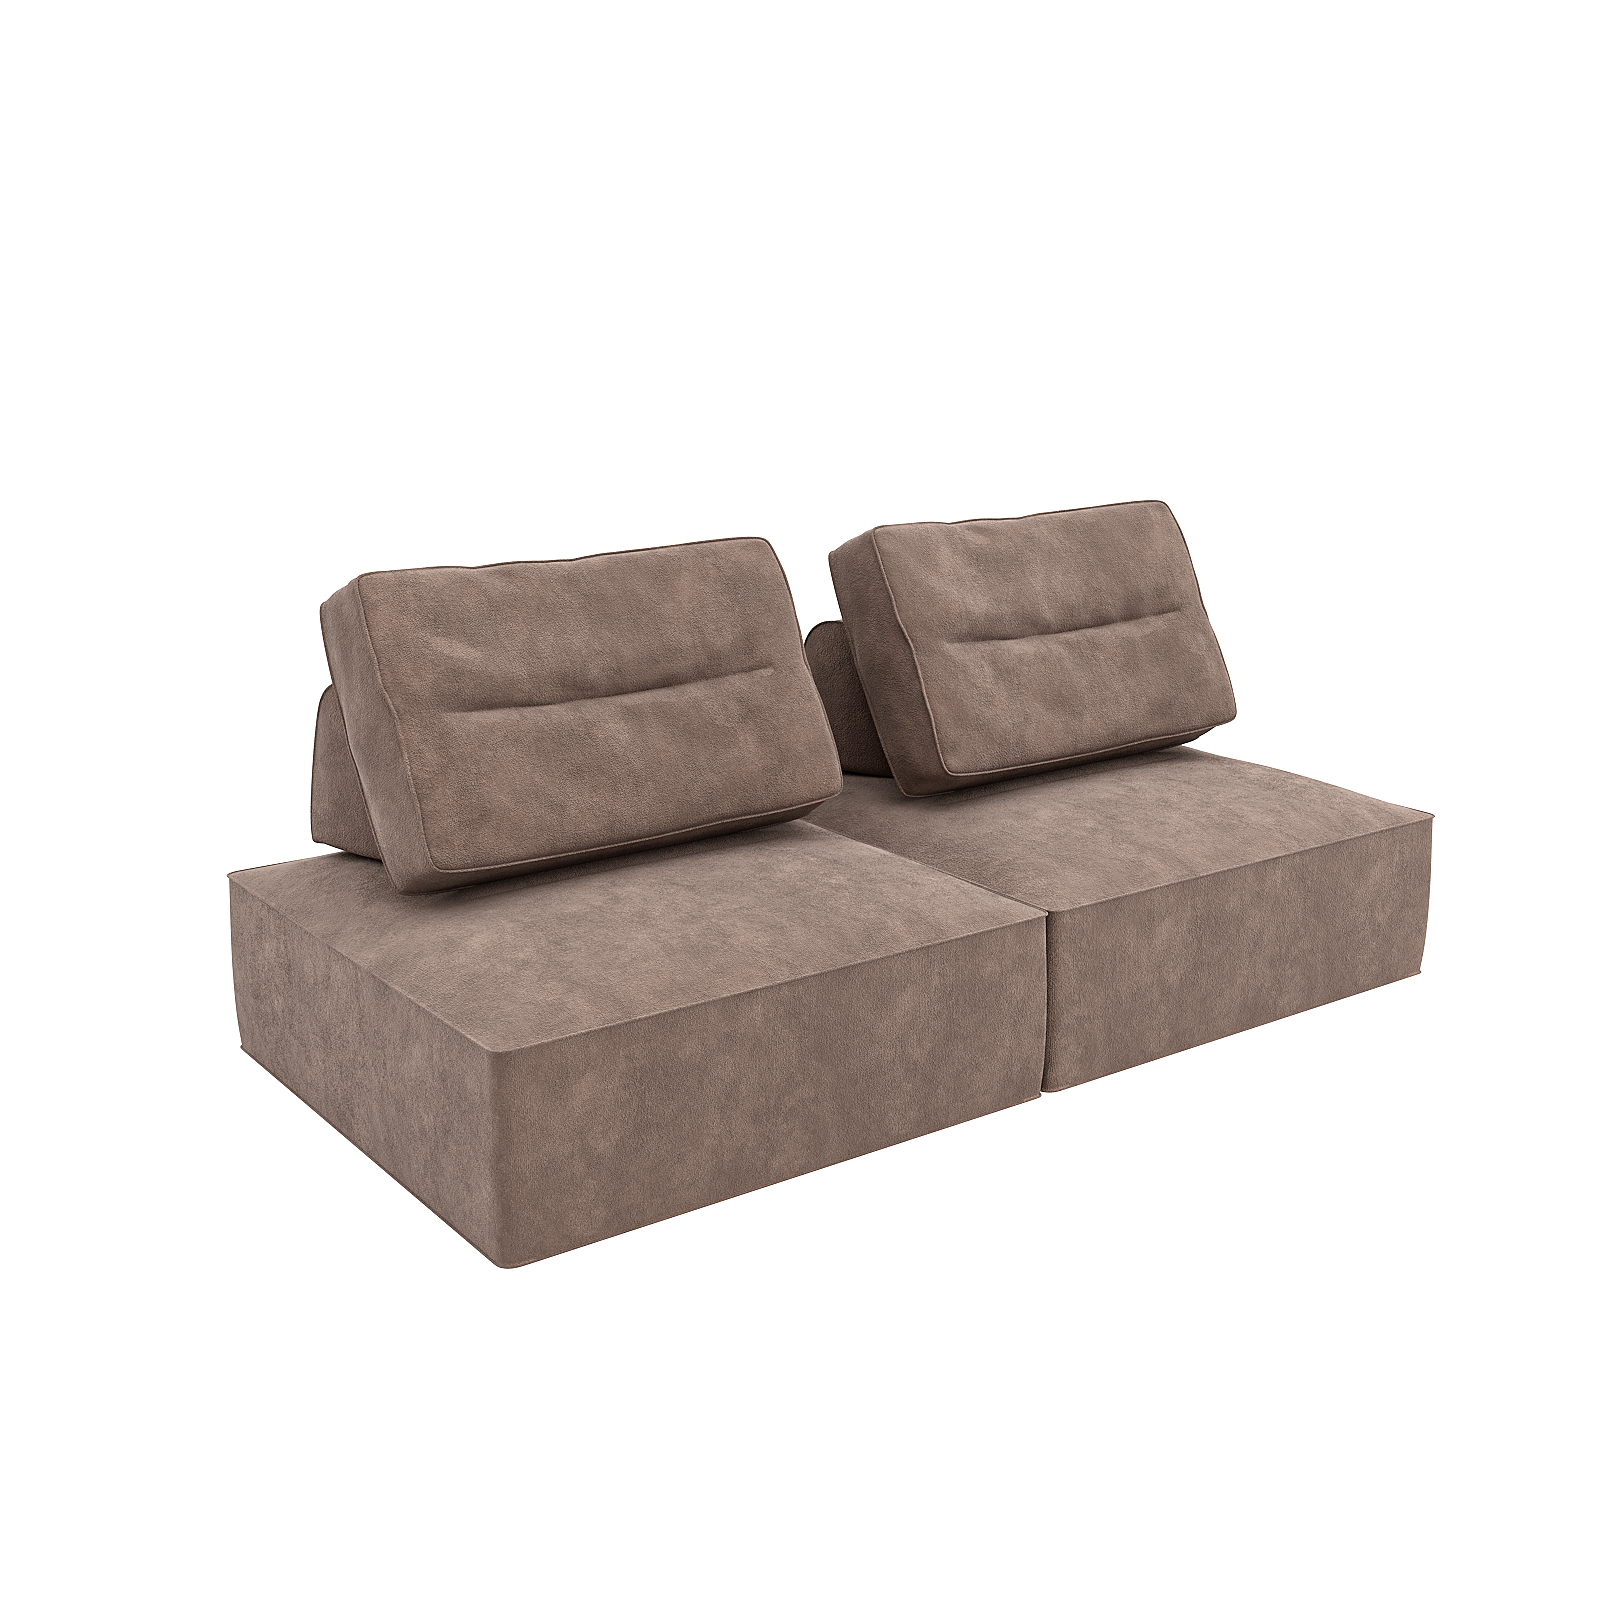 9-Layer Sofa Thick